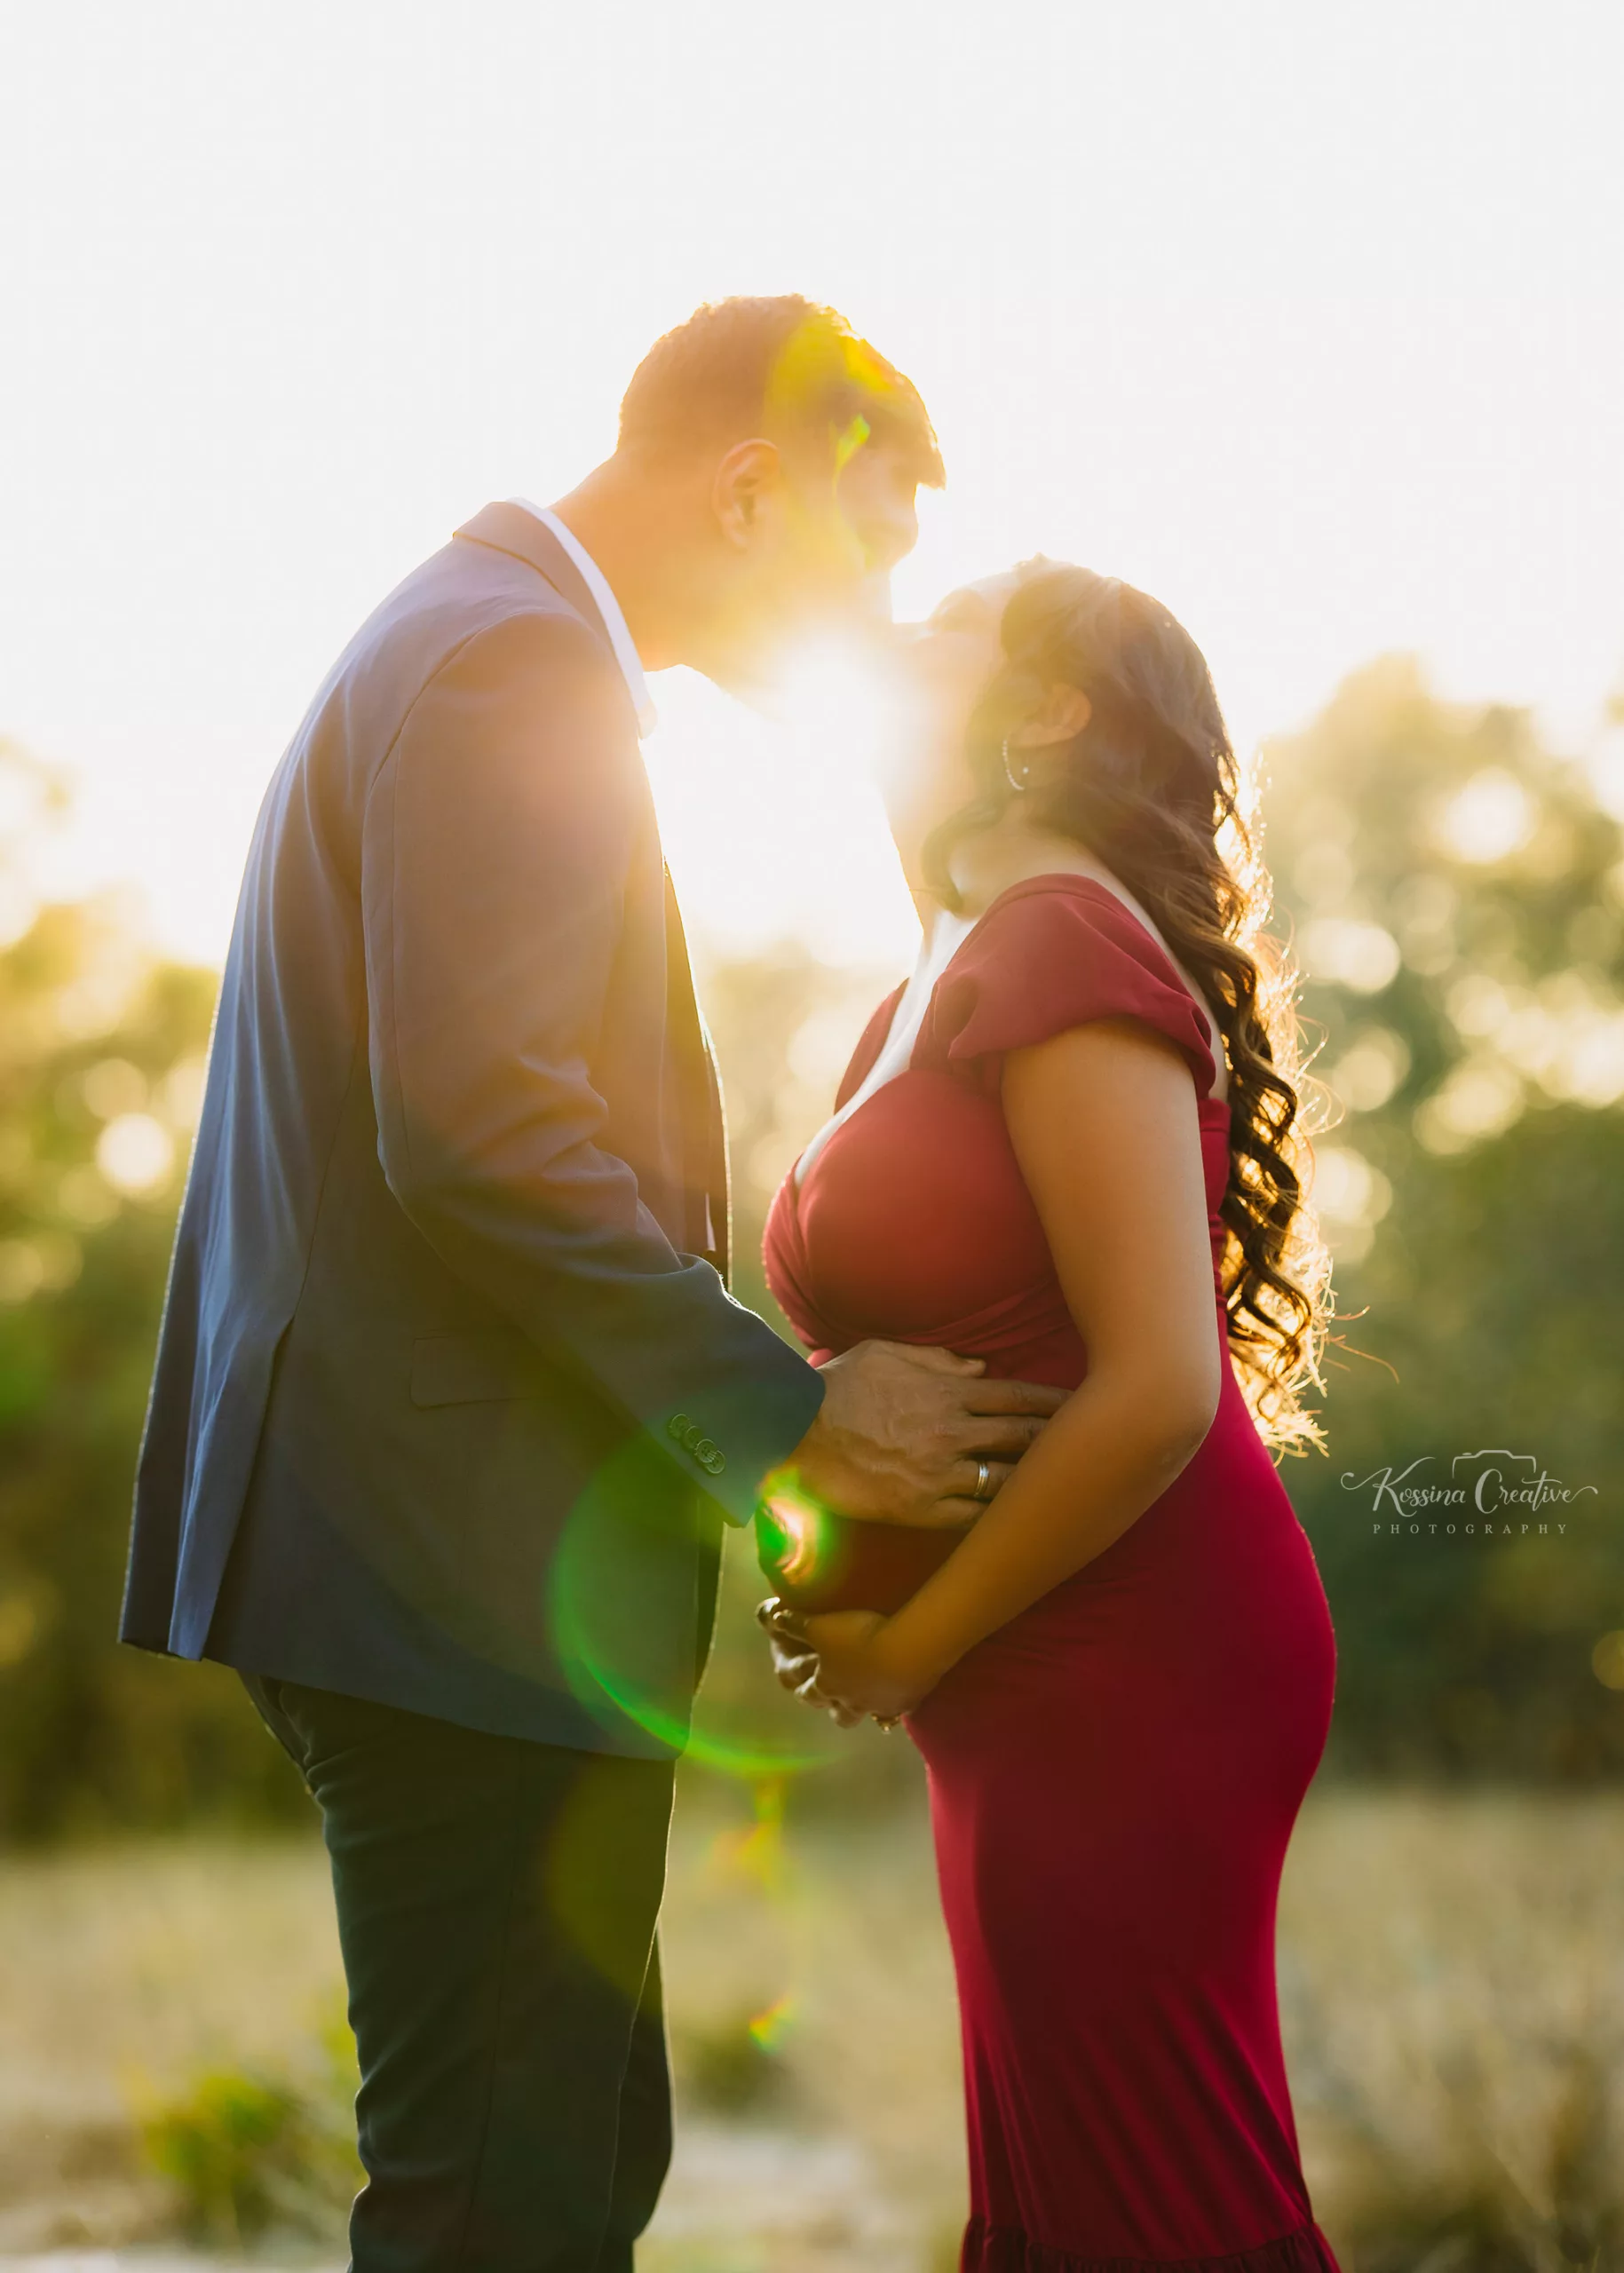 Orlando Maternity Photographer Pregnancy photography sunset